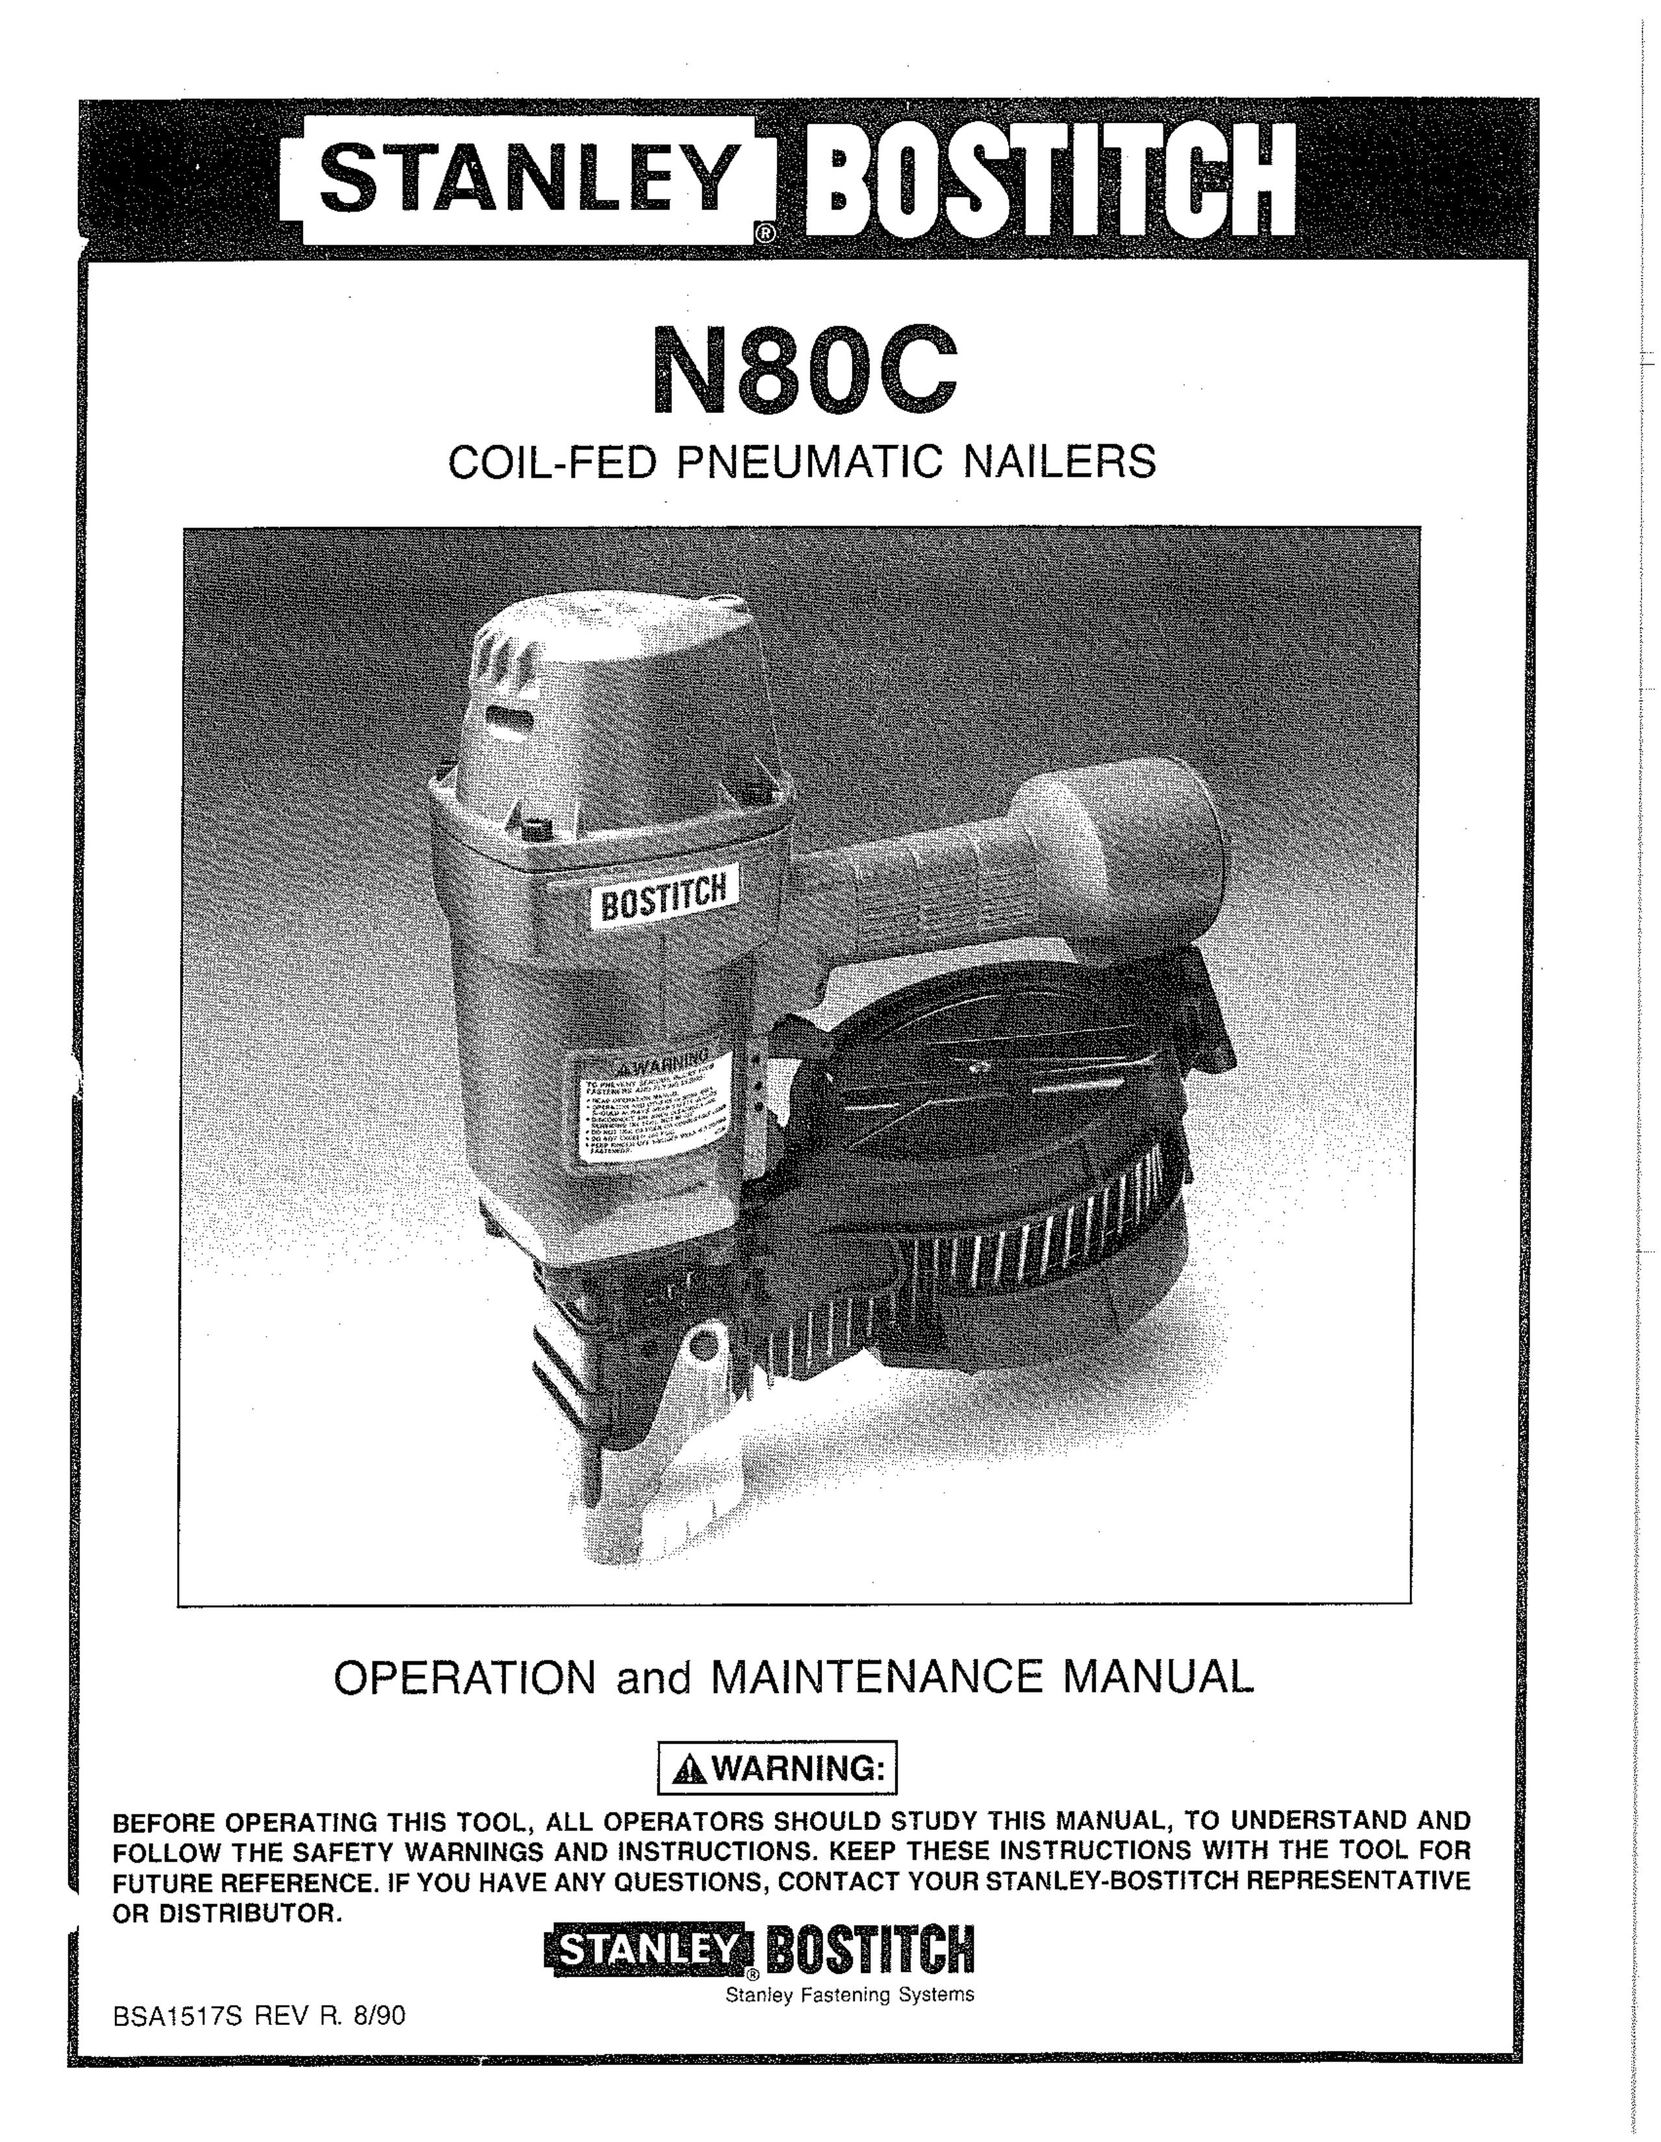 Bostitch N80C Nail Gun User Manual